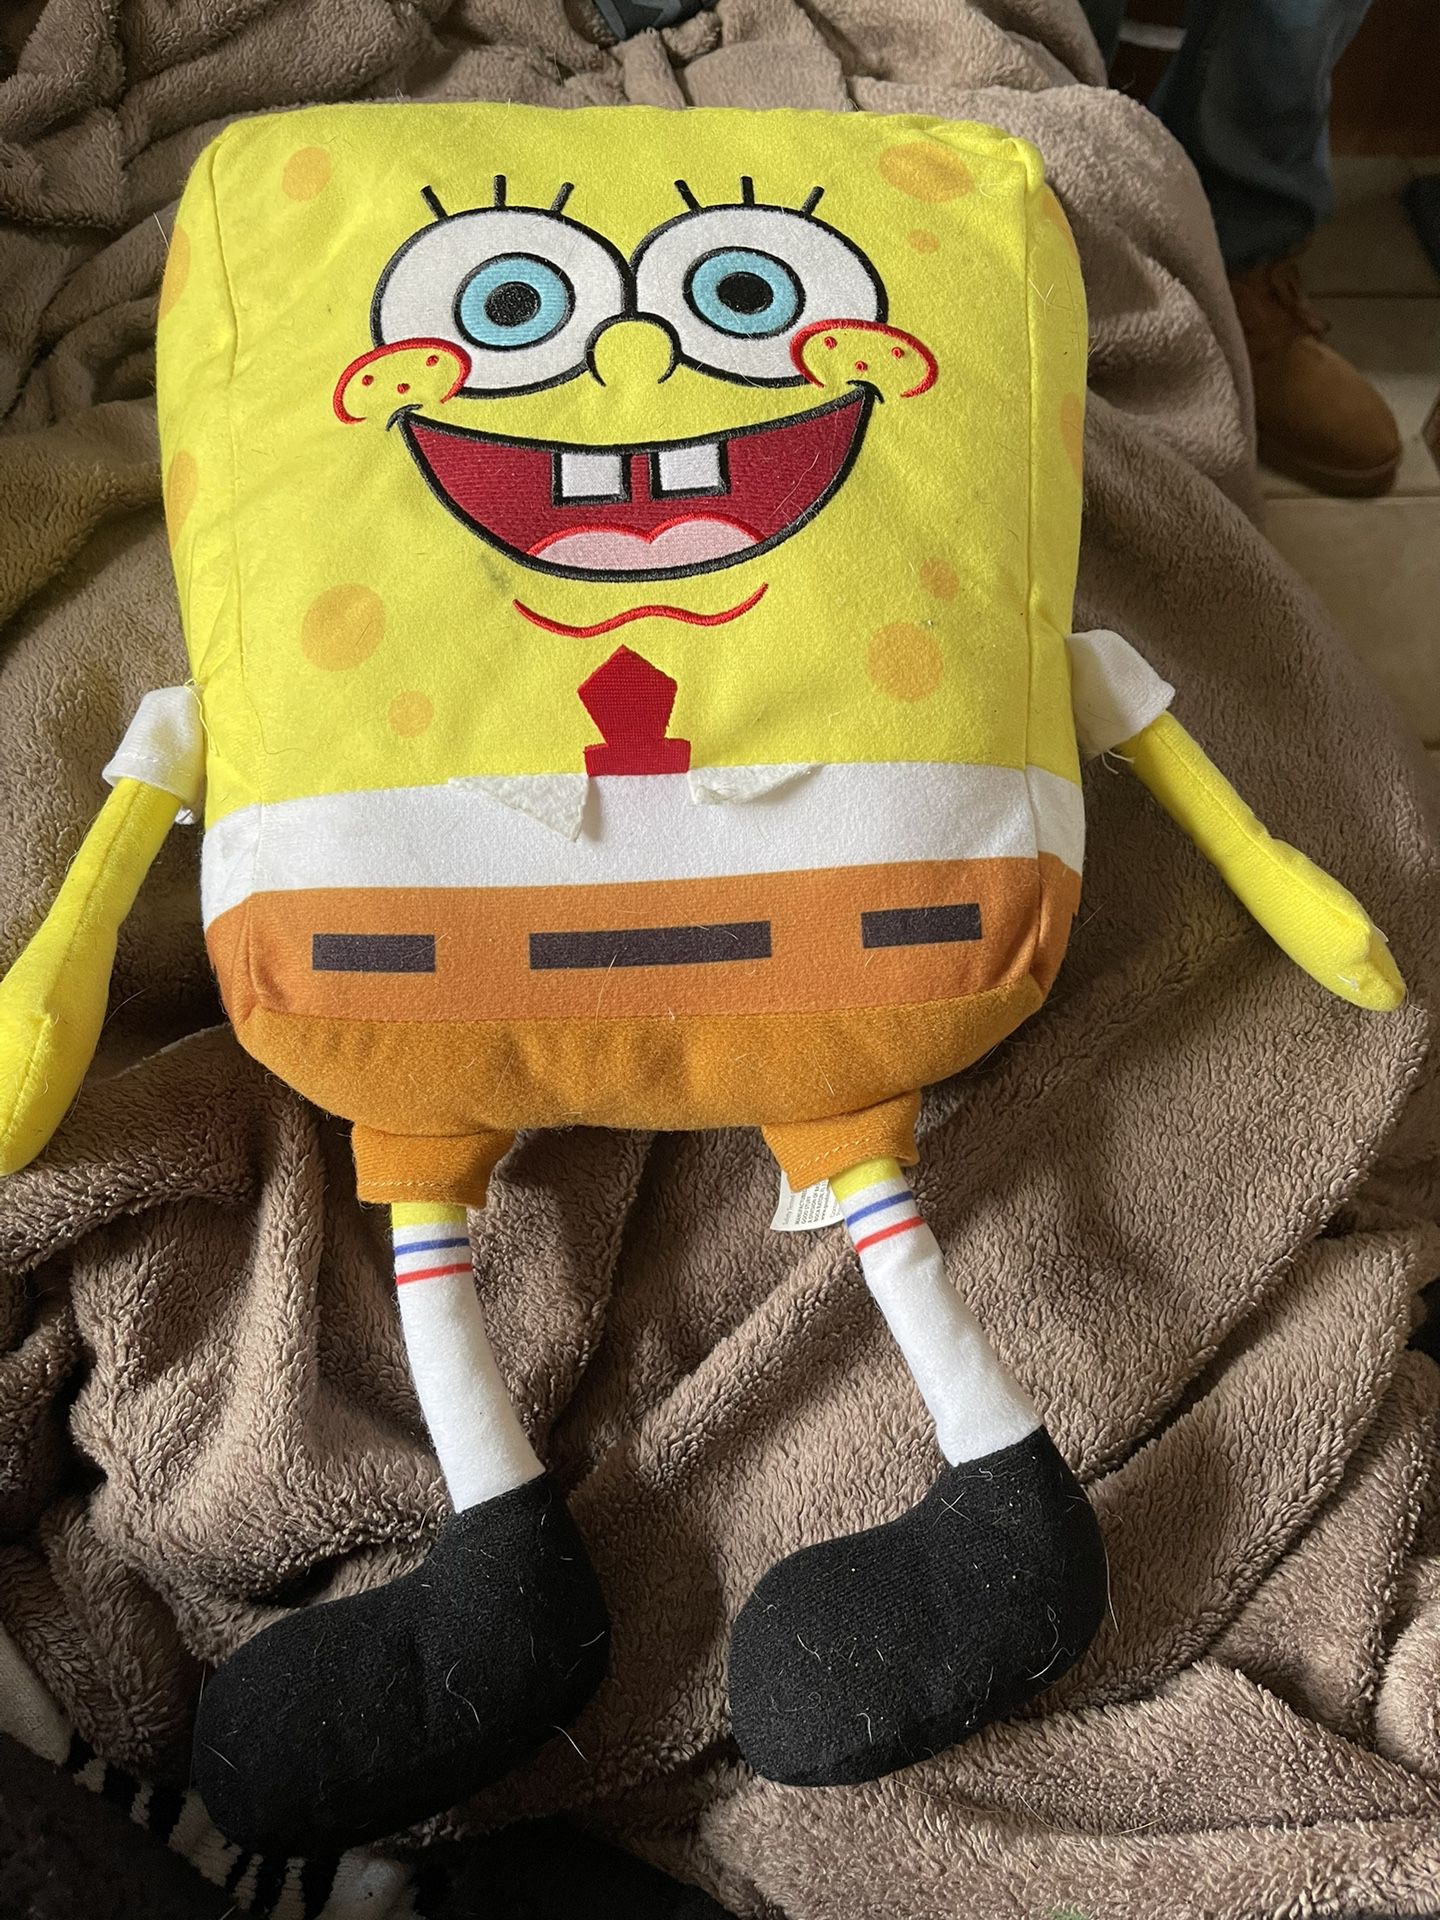 SpongeBob Squarepants Plush 